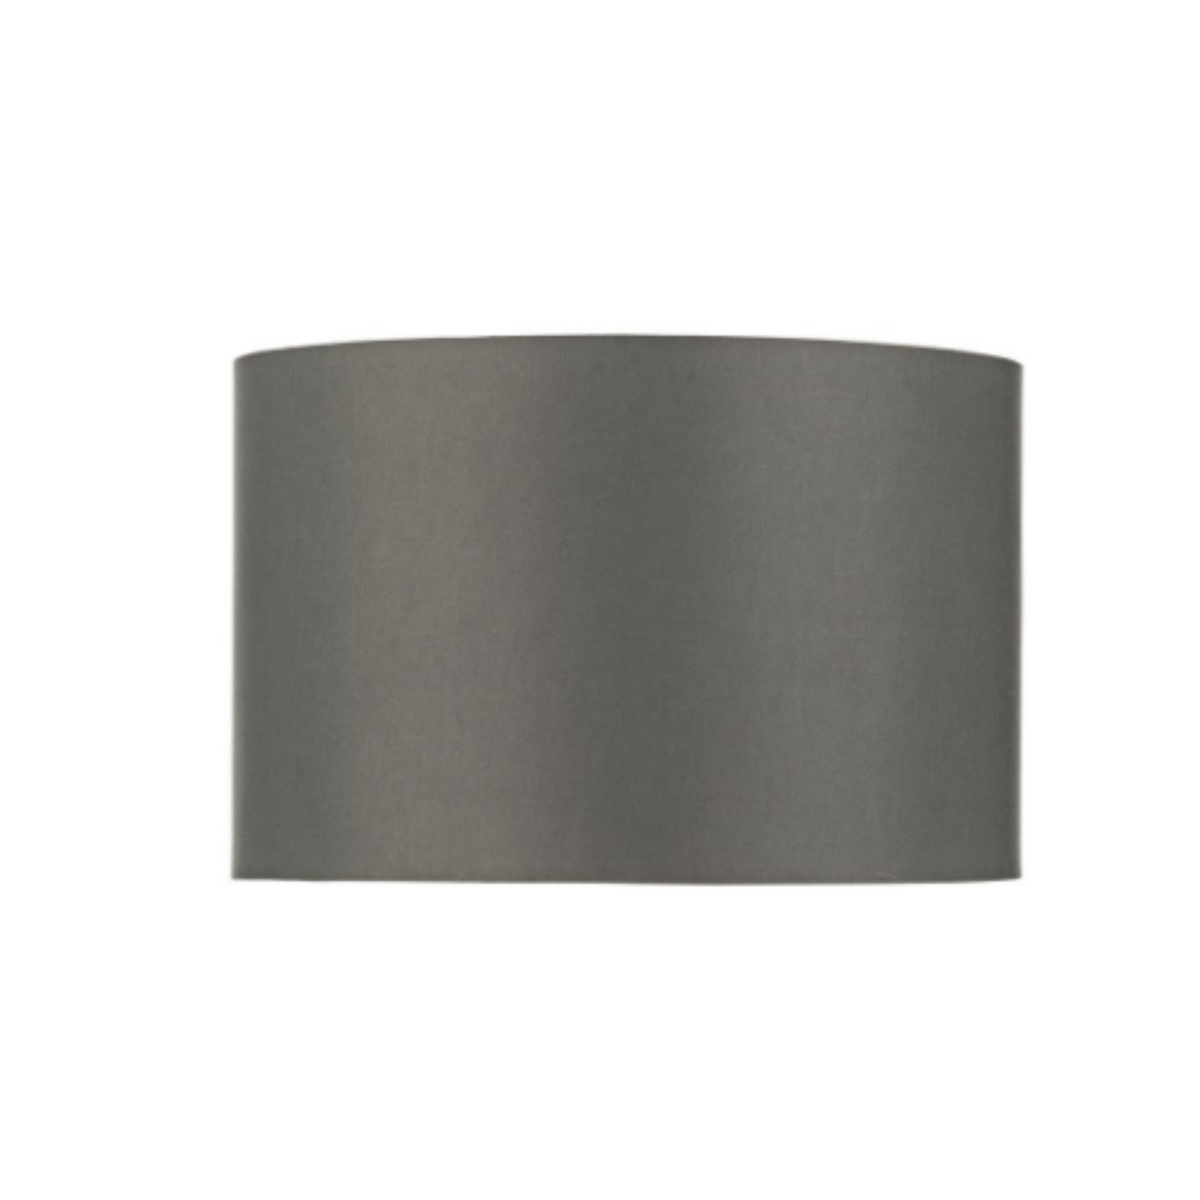 Igor Table Lamp Shade - Cusack Lighting